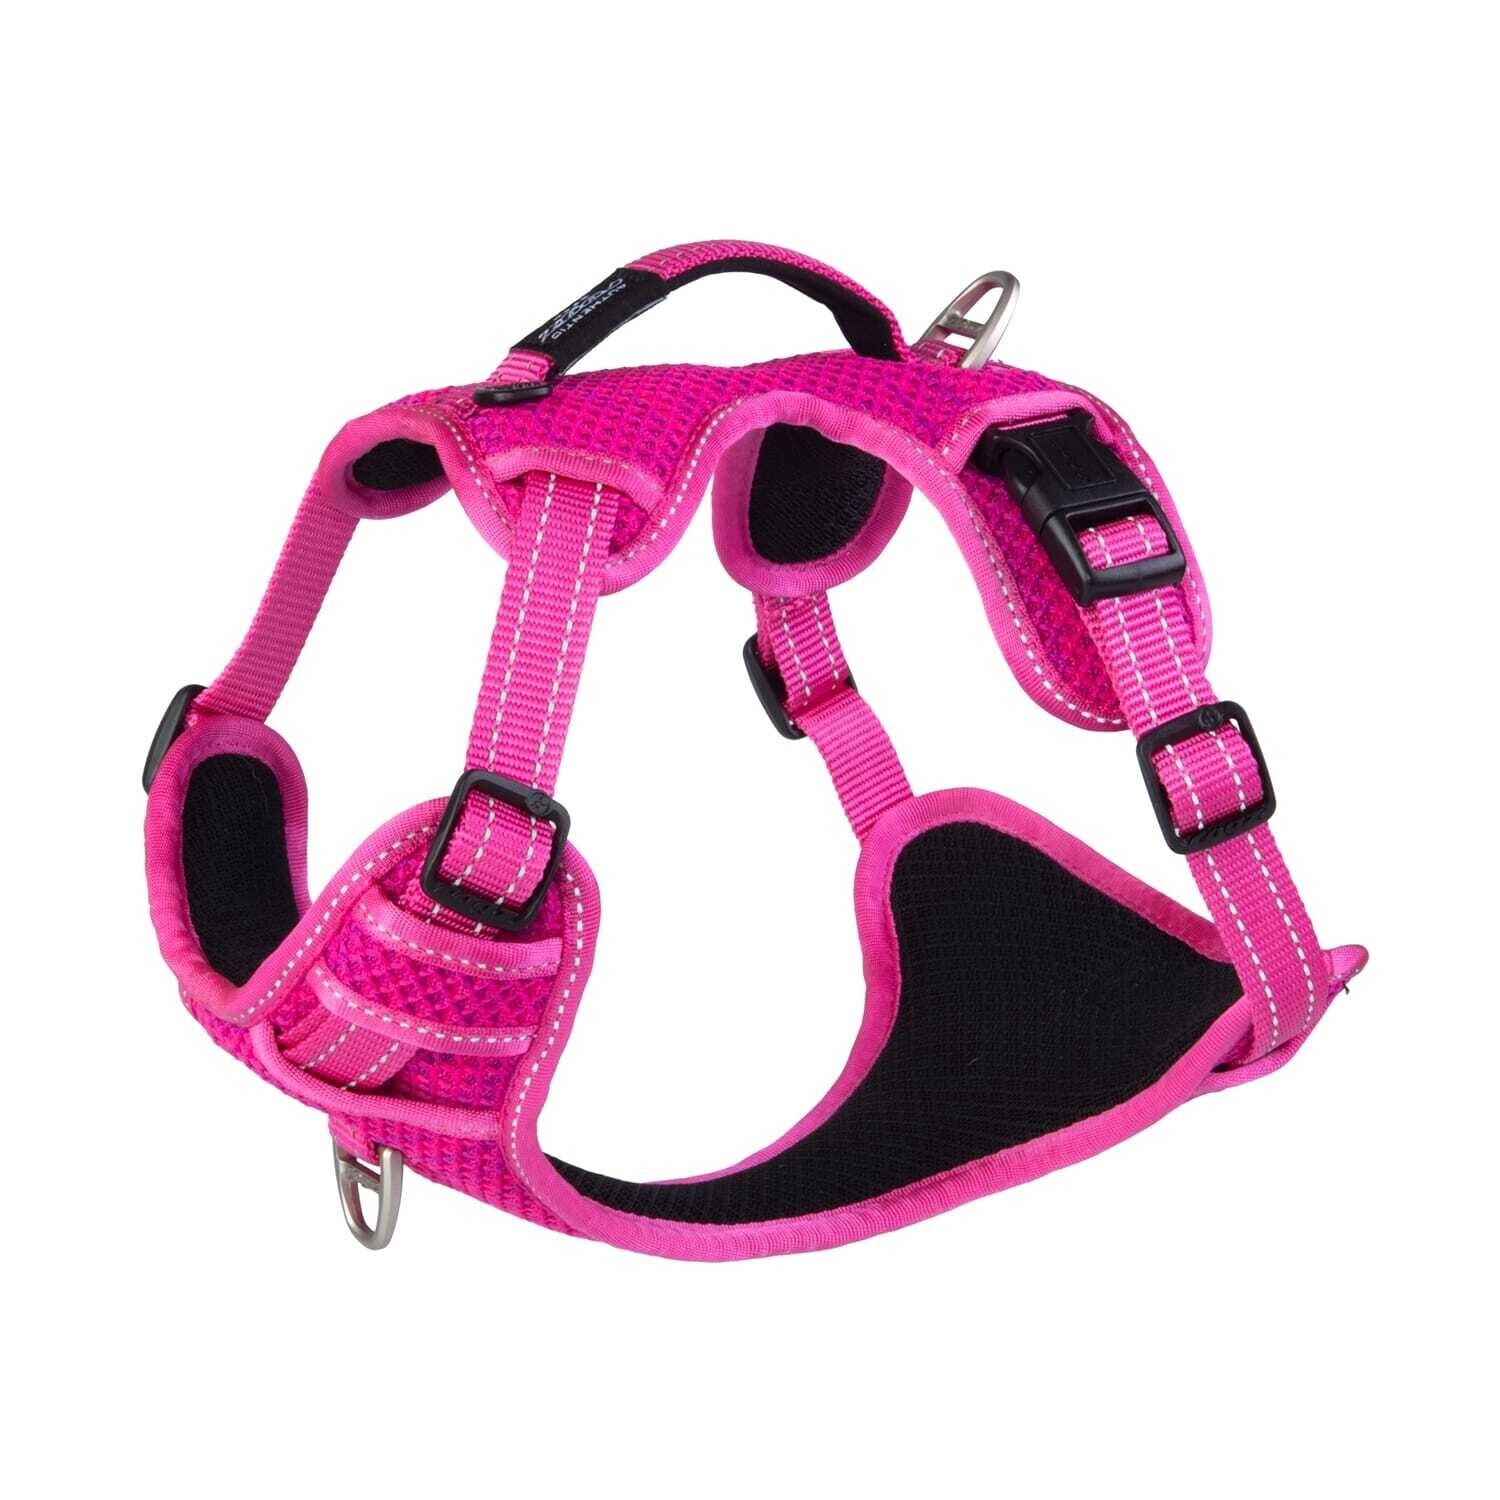 Rogz Explore Harness - Pink